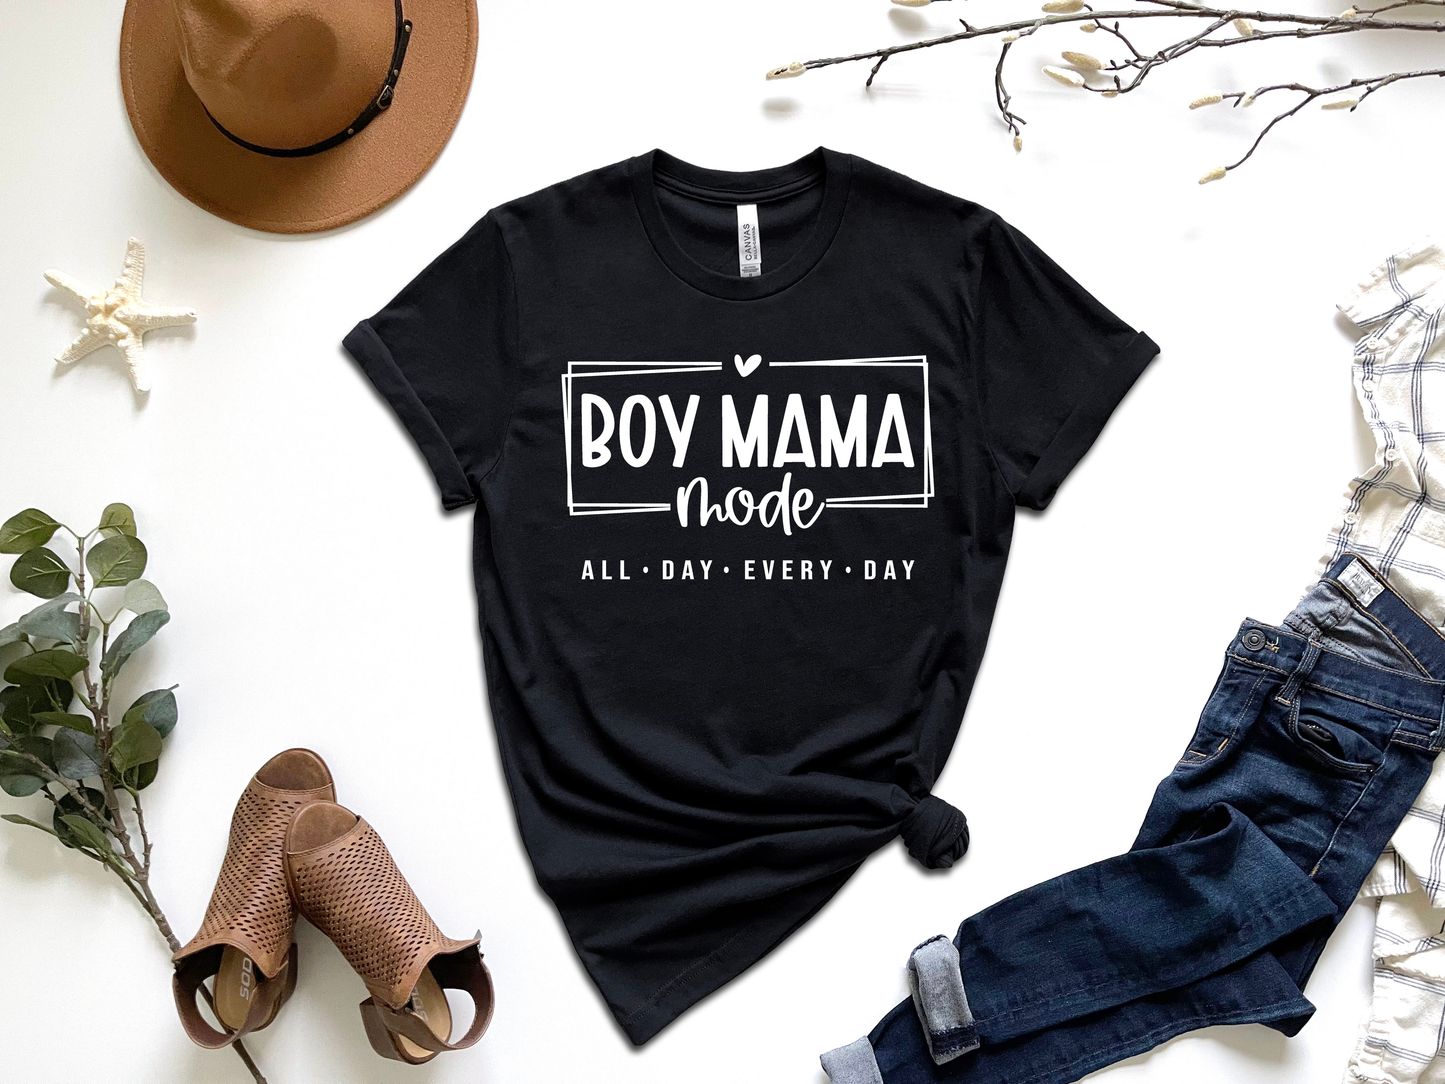 3001CVC-V Adult Tee Shirt-Boy Mama Mode